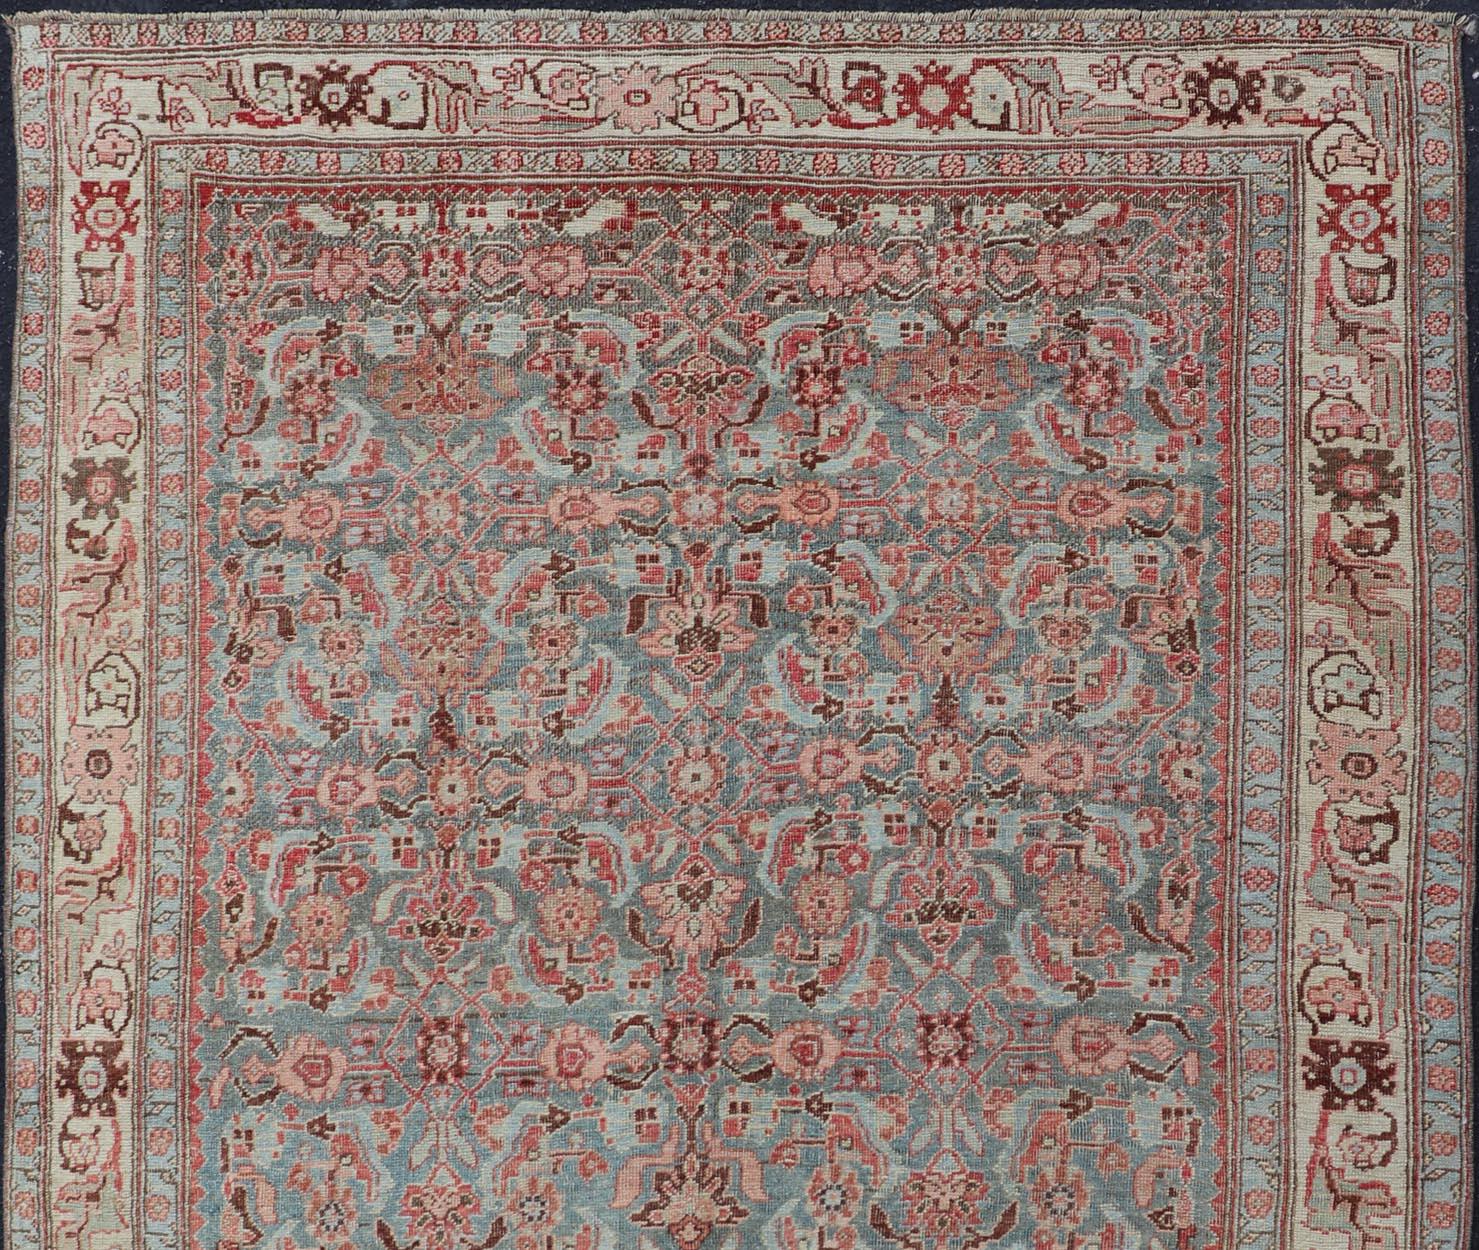 Antique Persian Bidjar rug with tribal herati design in light blue & soft coral.
Rug R20-94, country of origin / type: Iran / Bidjar, circa 1910.
Measures: 4'7 x 7'0.
This magnificent Bidjar with an exquisite, all-over Herati pattern, rests